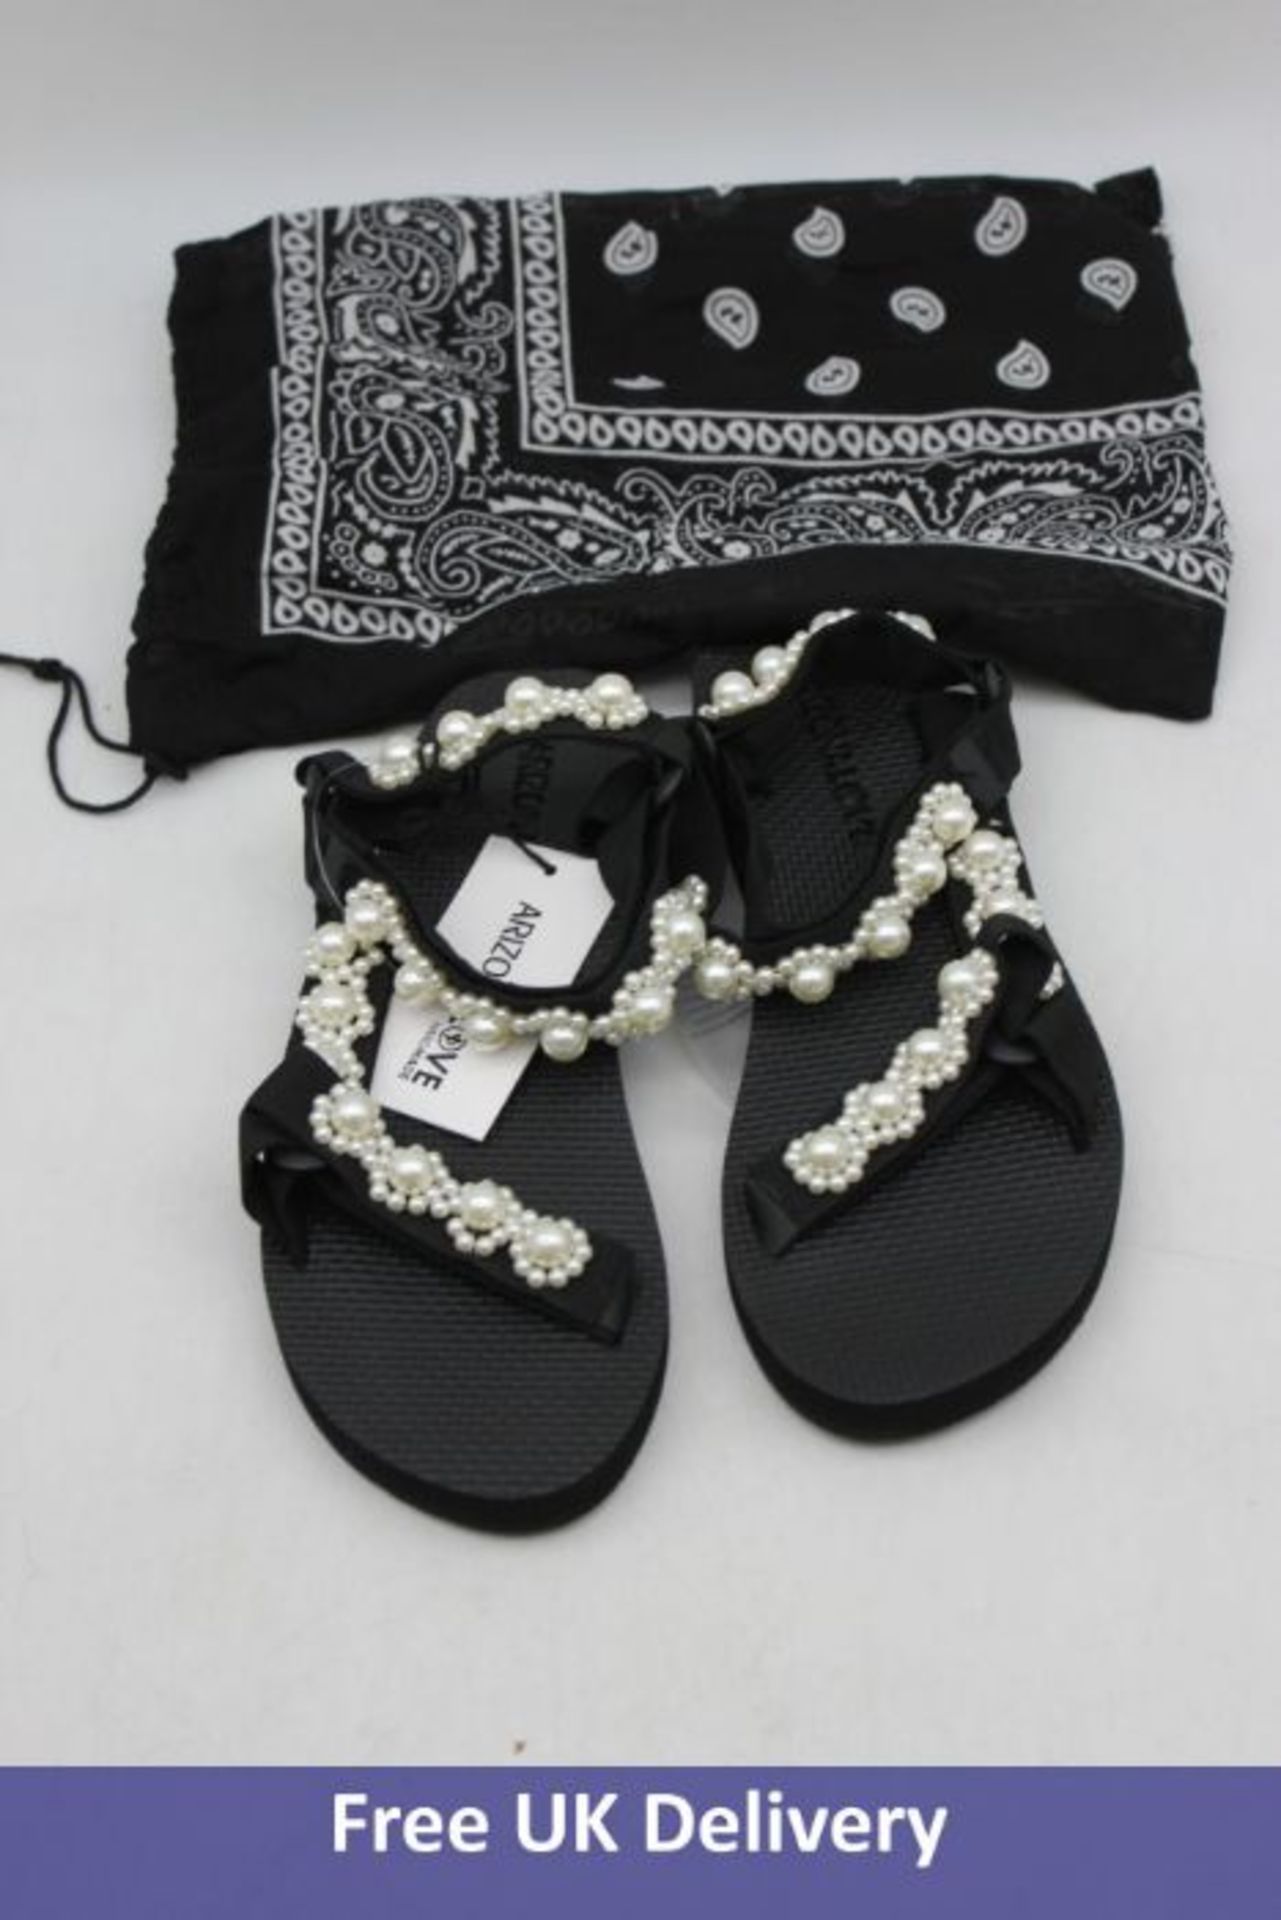 Four Arizona Love Pearl Sandals, Black, EU 41, New With Cloth Bag